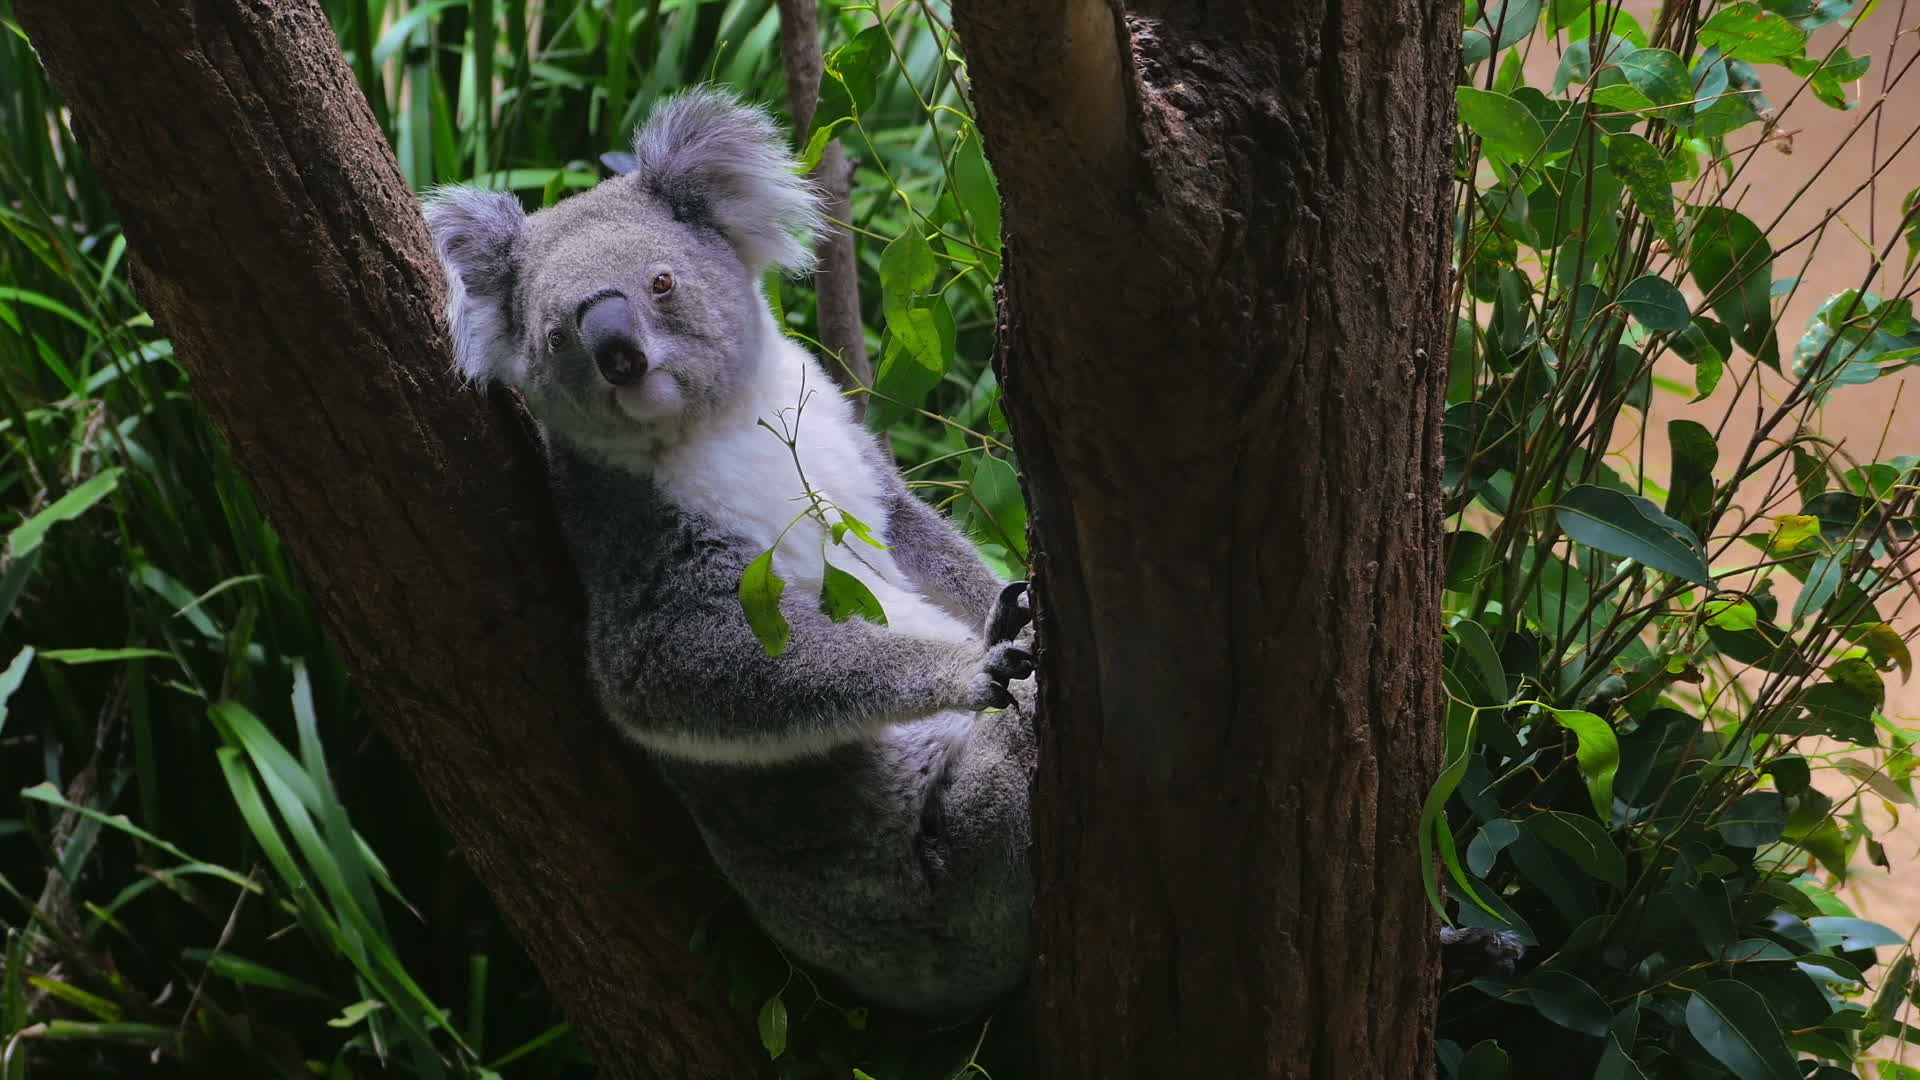 Koala in a tree, 4K UHD video, Natural beauty, Serene wildlife, 1920x1080 Full HD Desktop